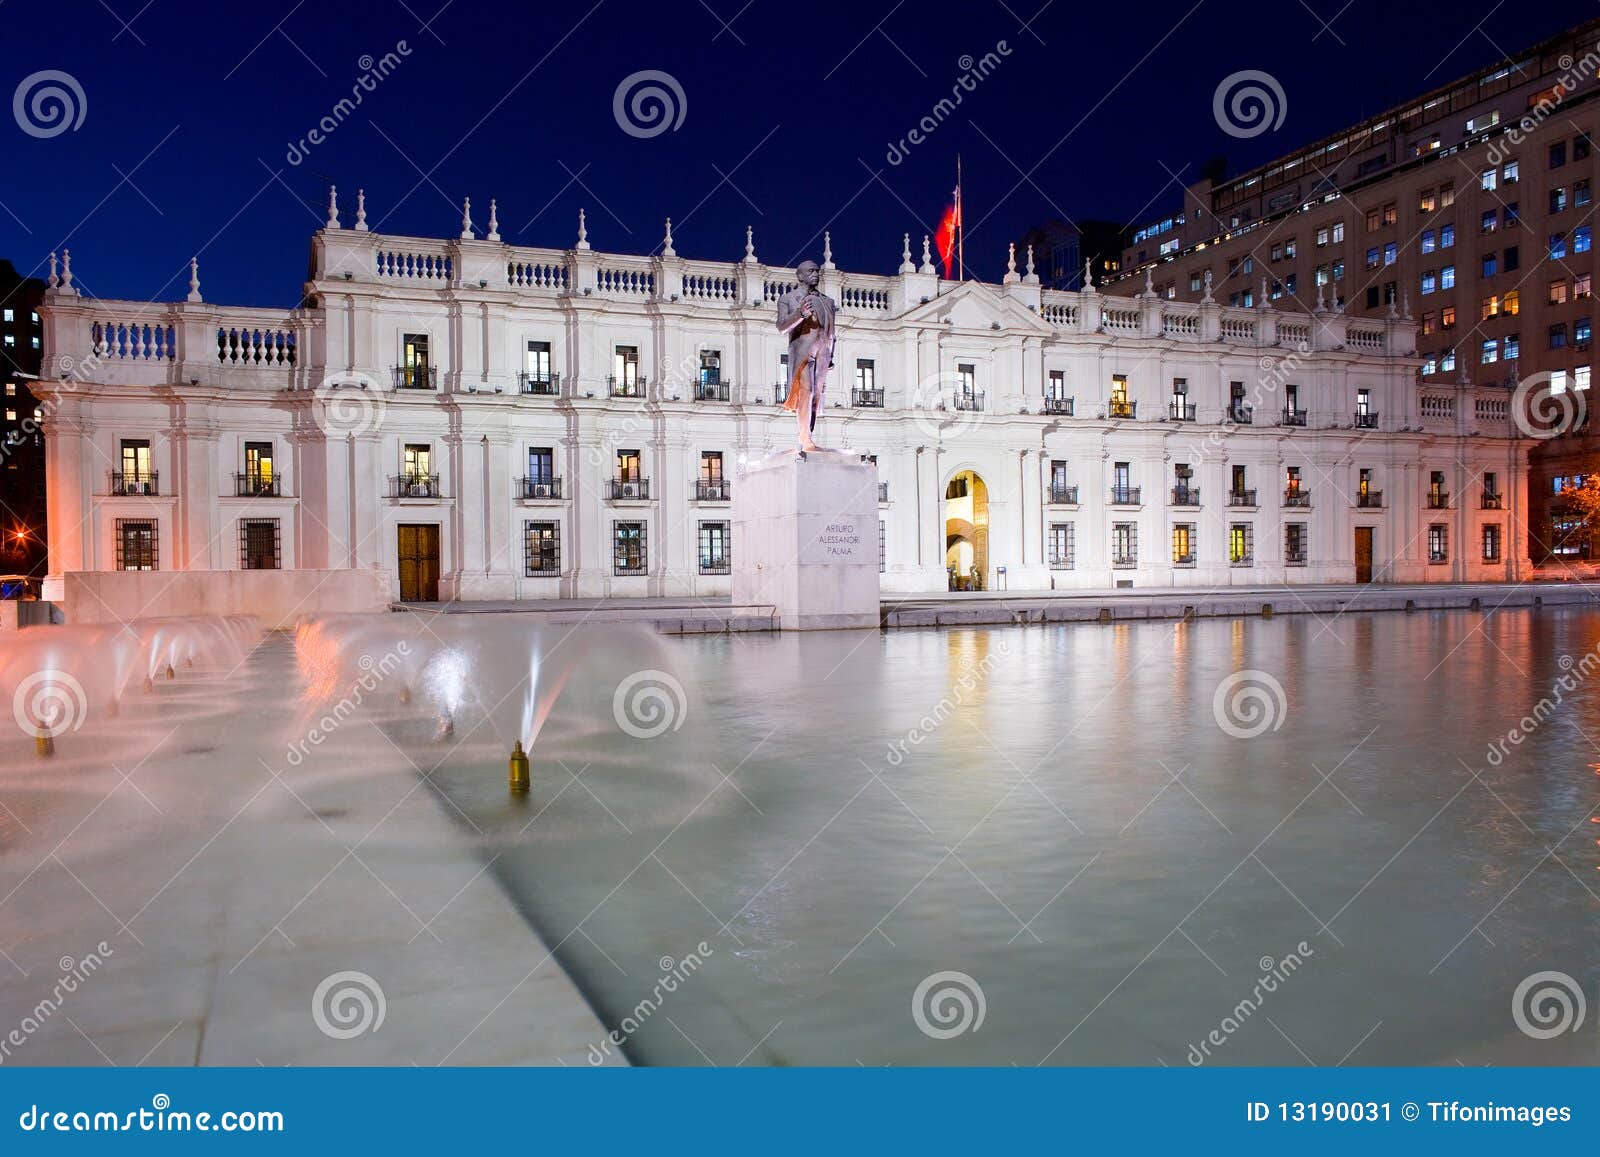 la moneda, chile's government palace